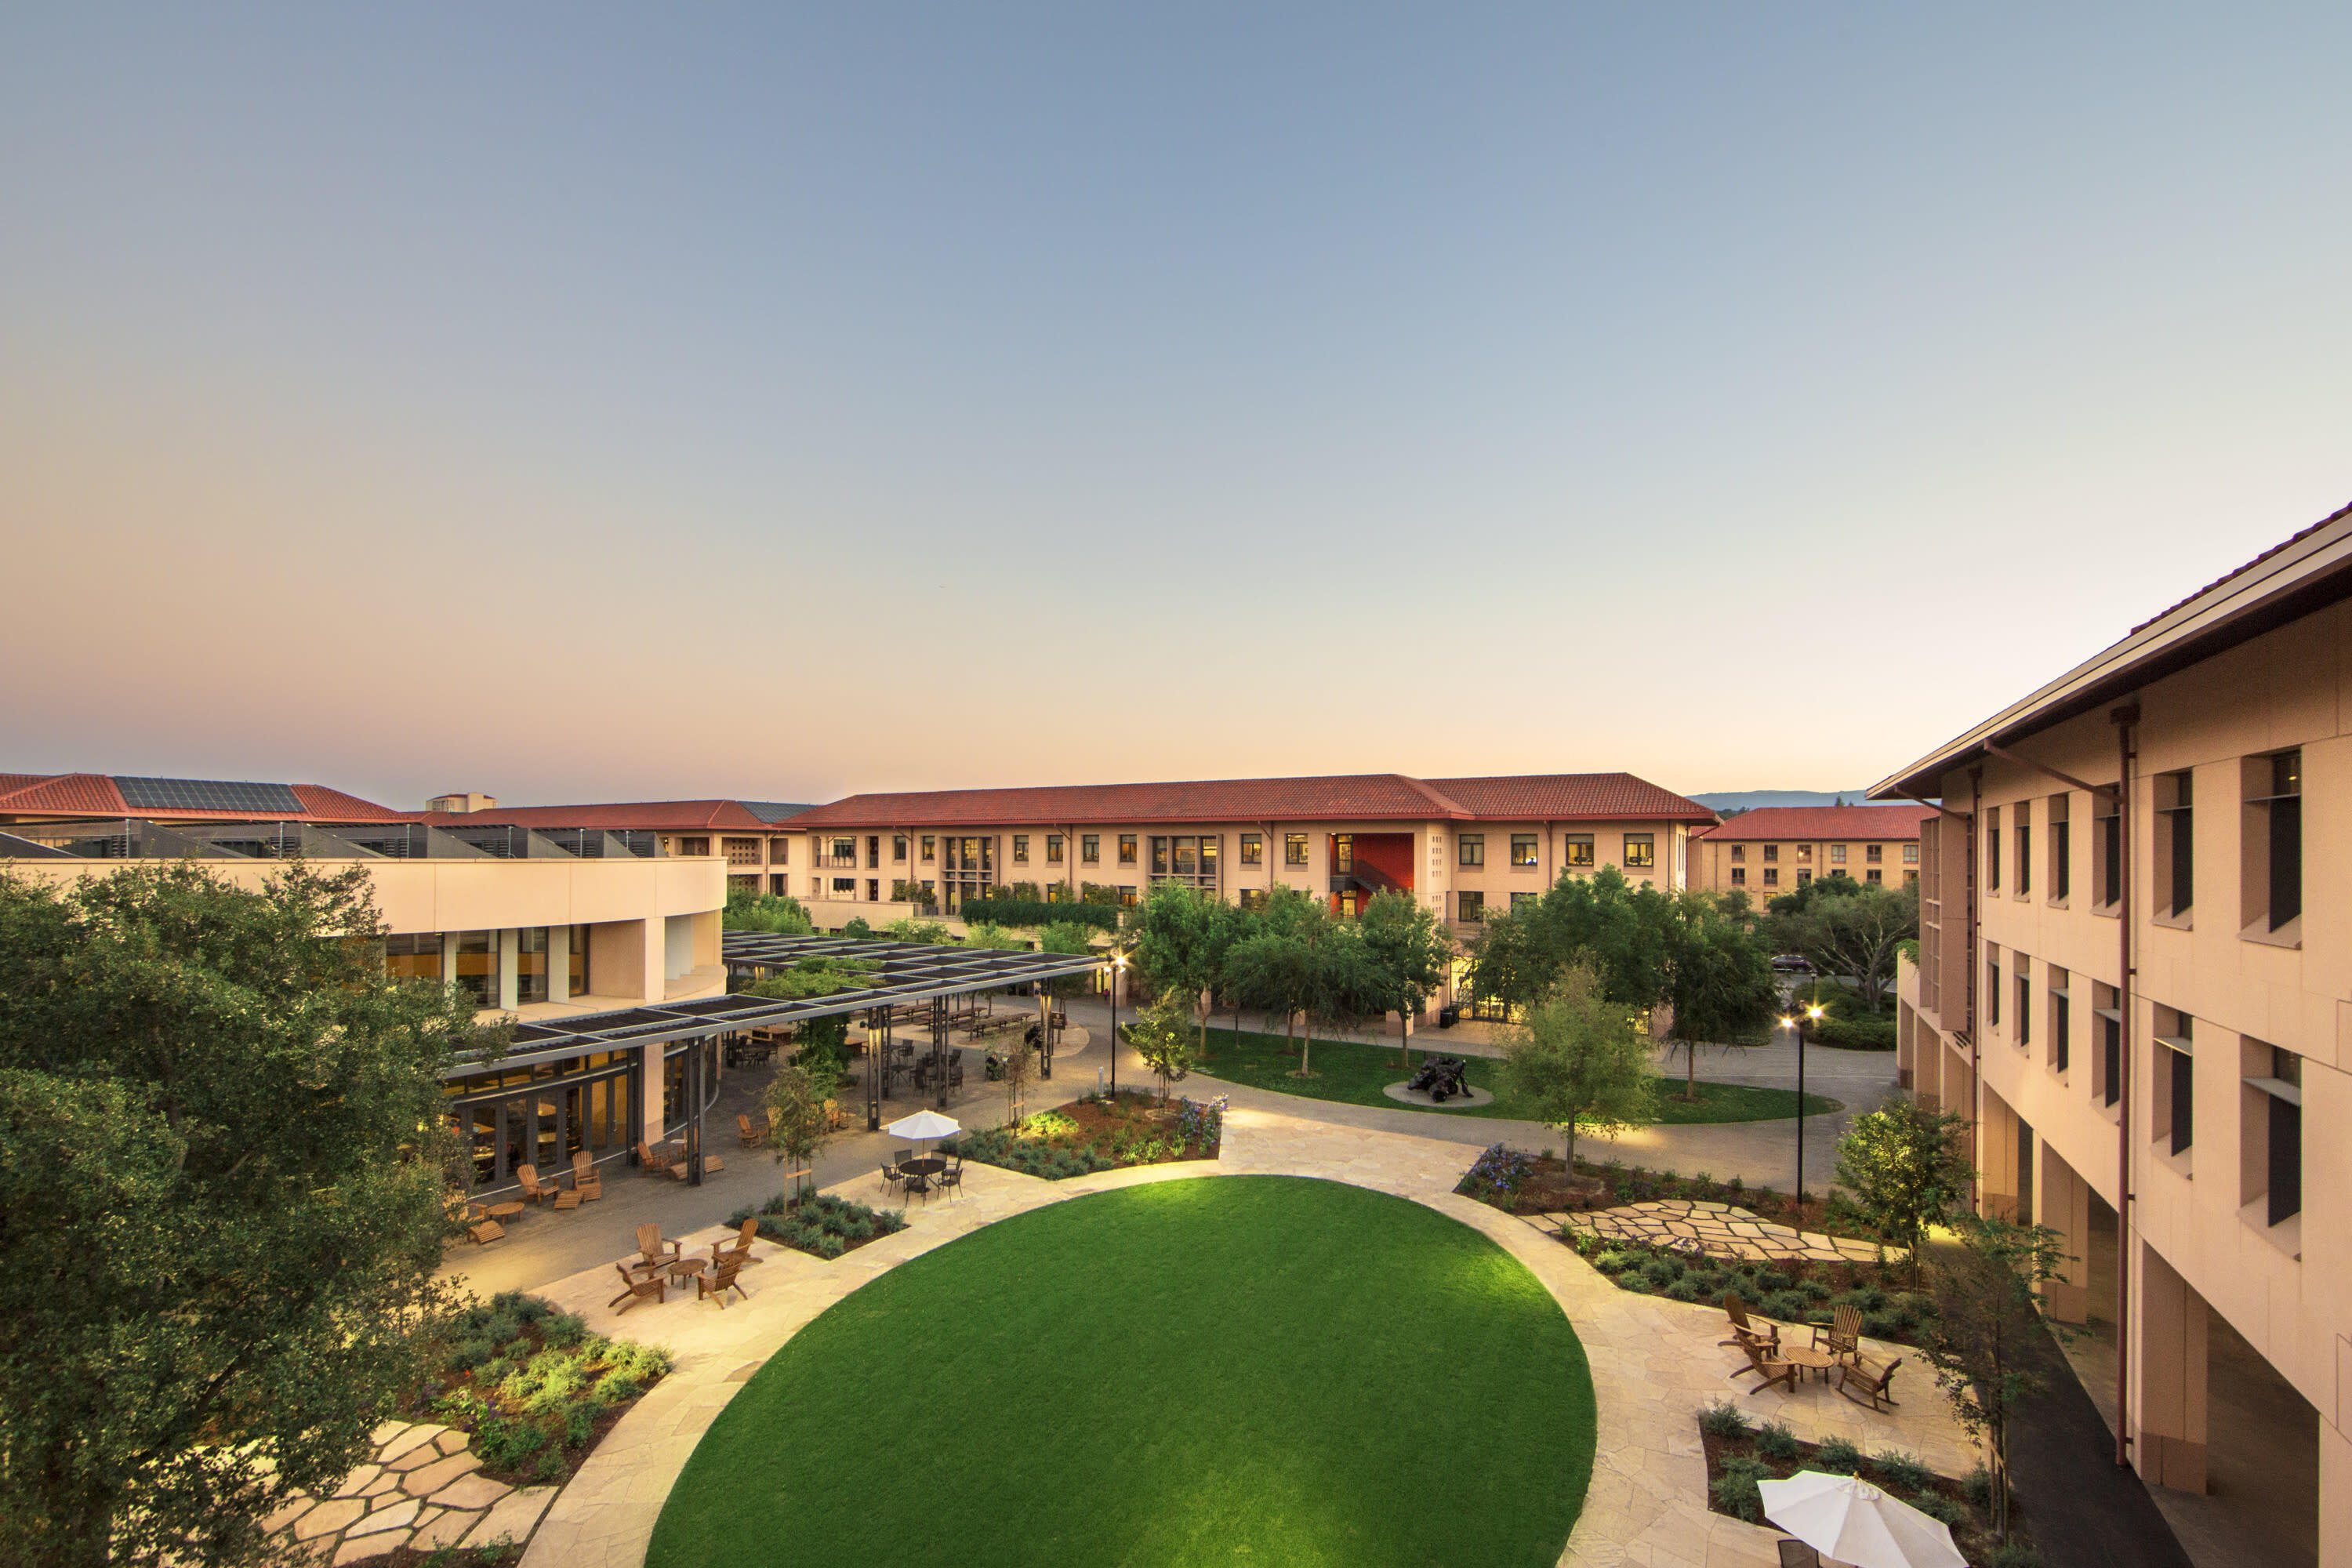 Stanford Graduate School of Business campus